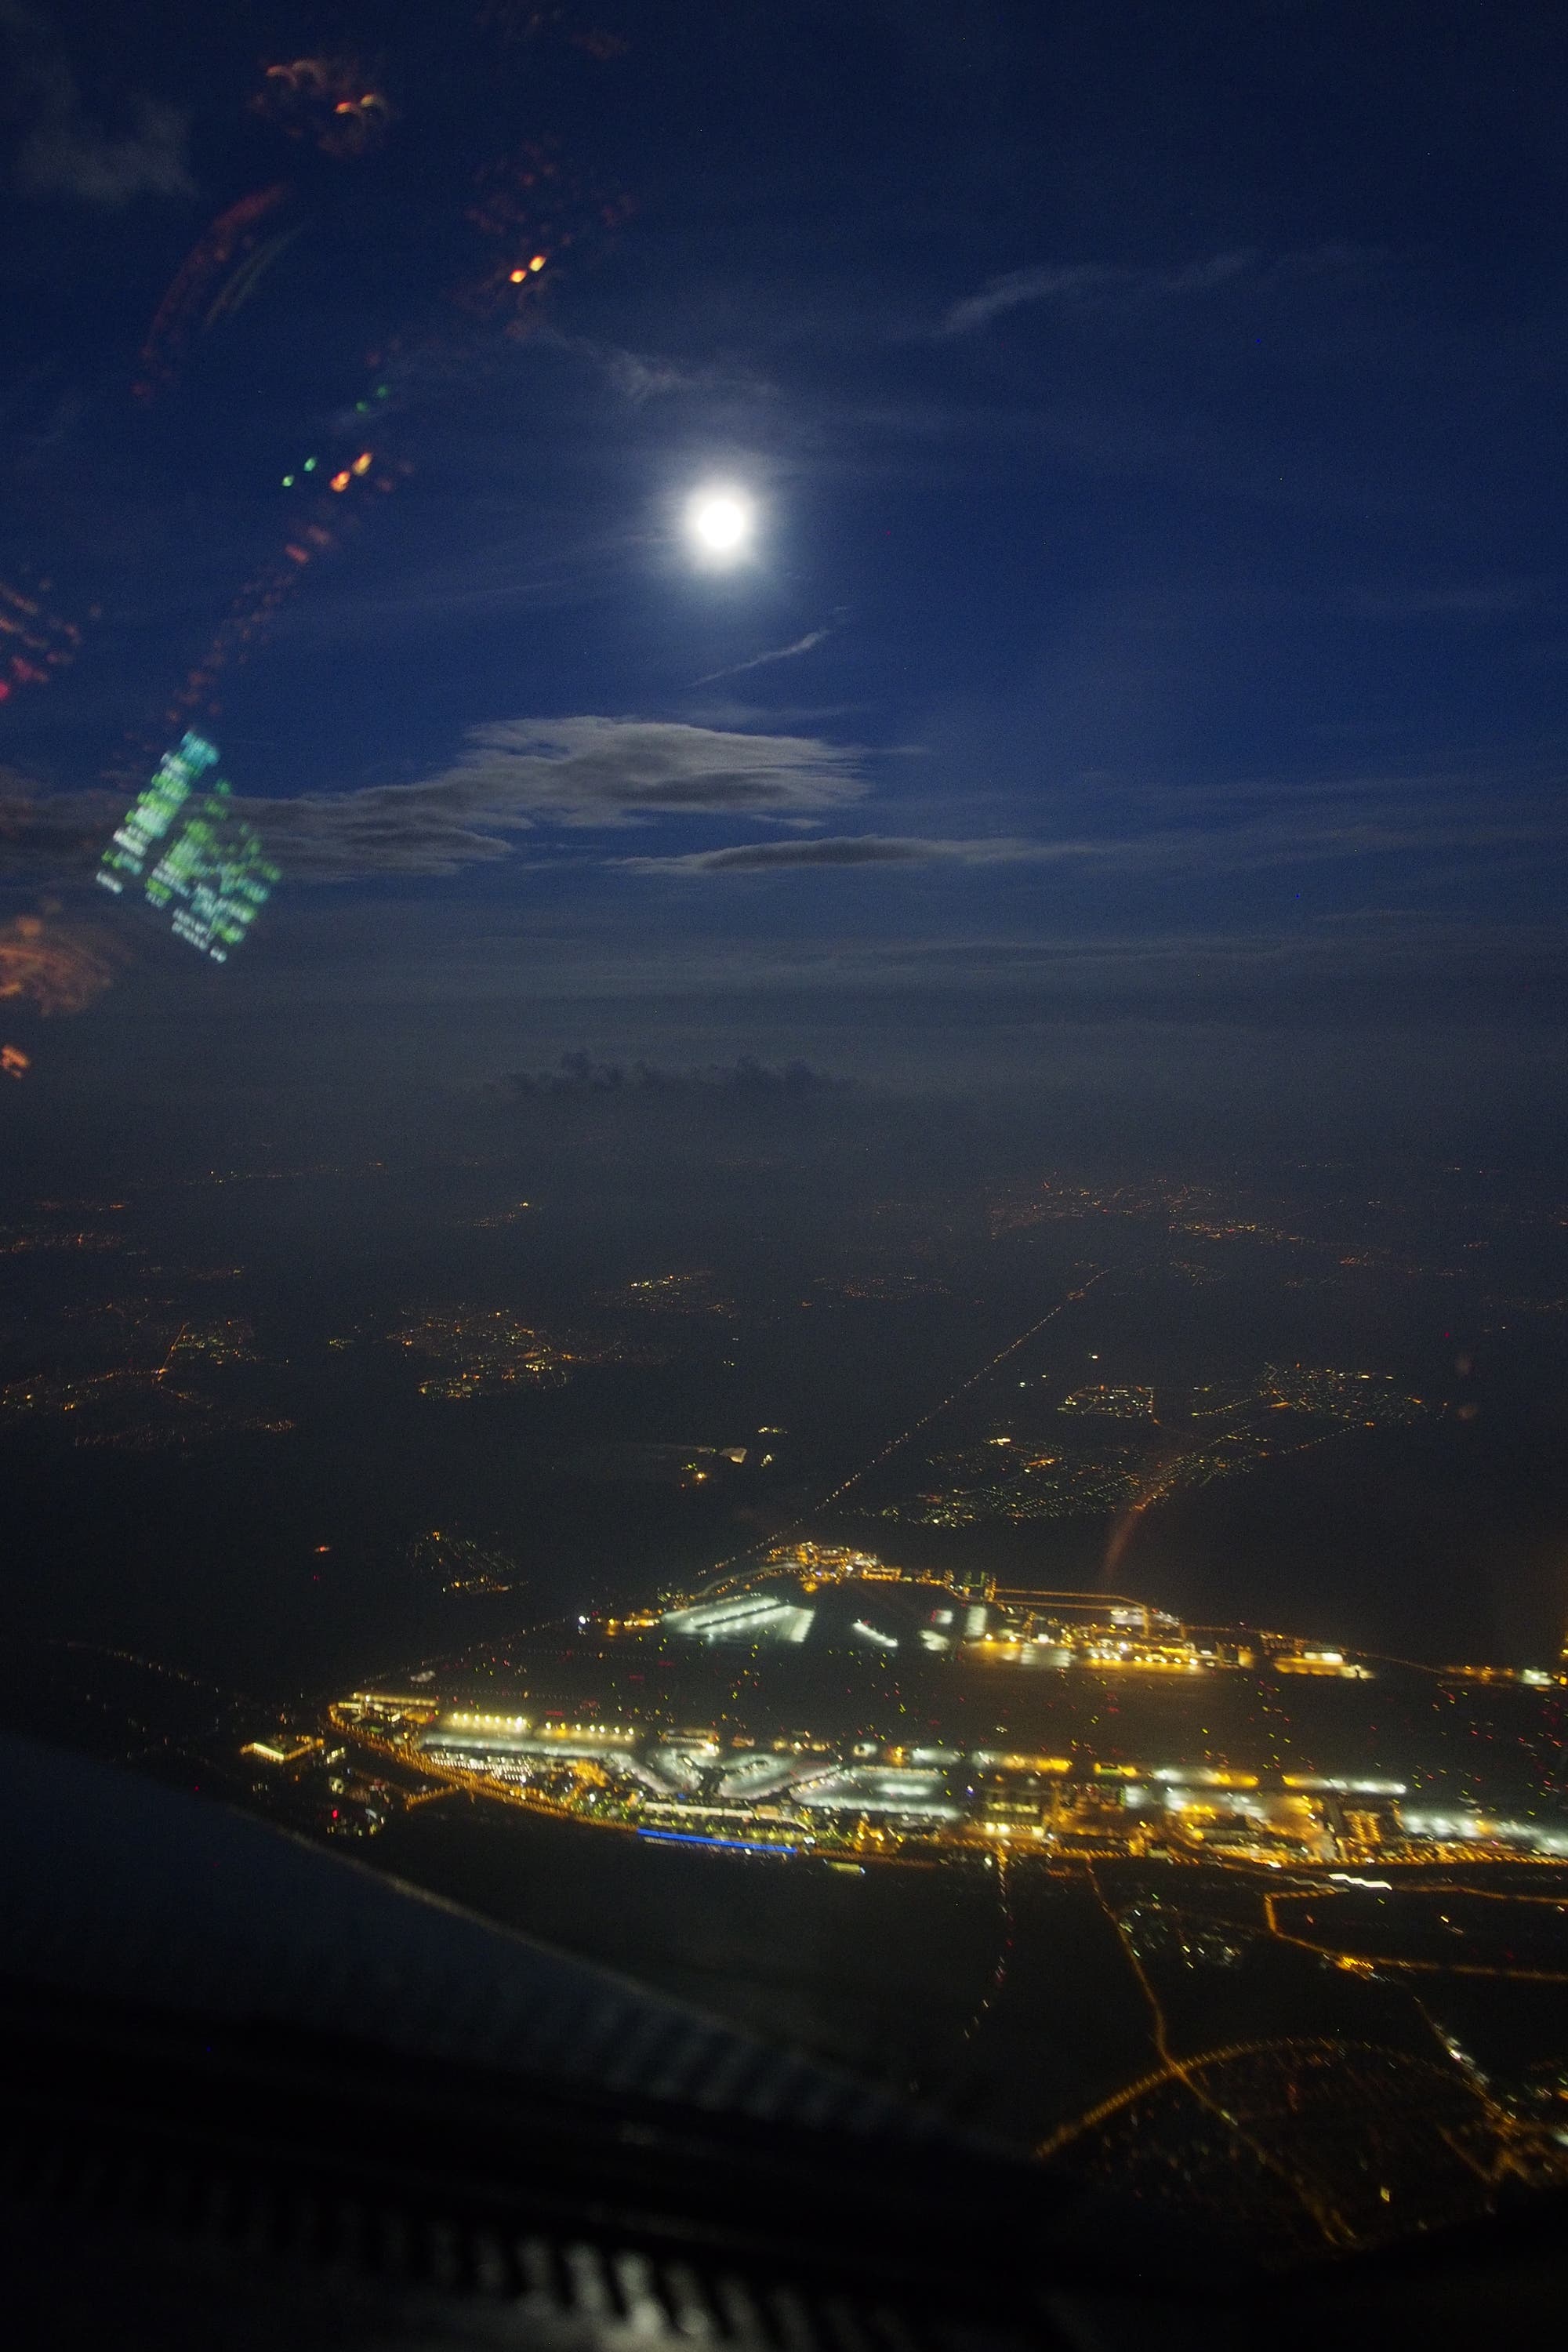 Mond über dem Flughafen Frankfurt